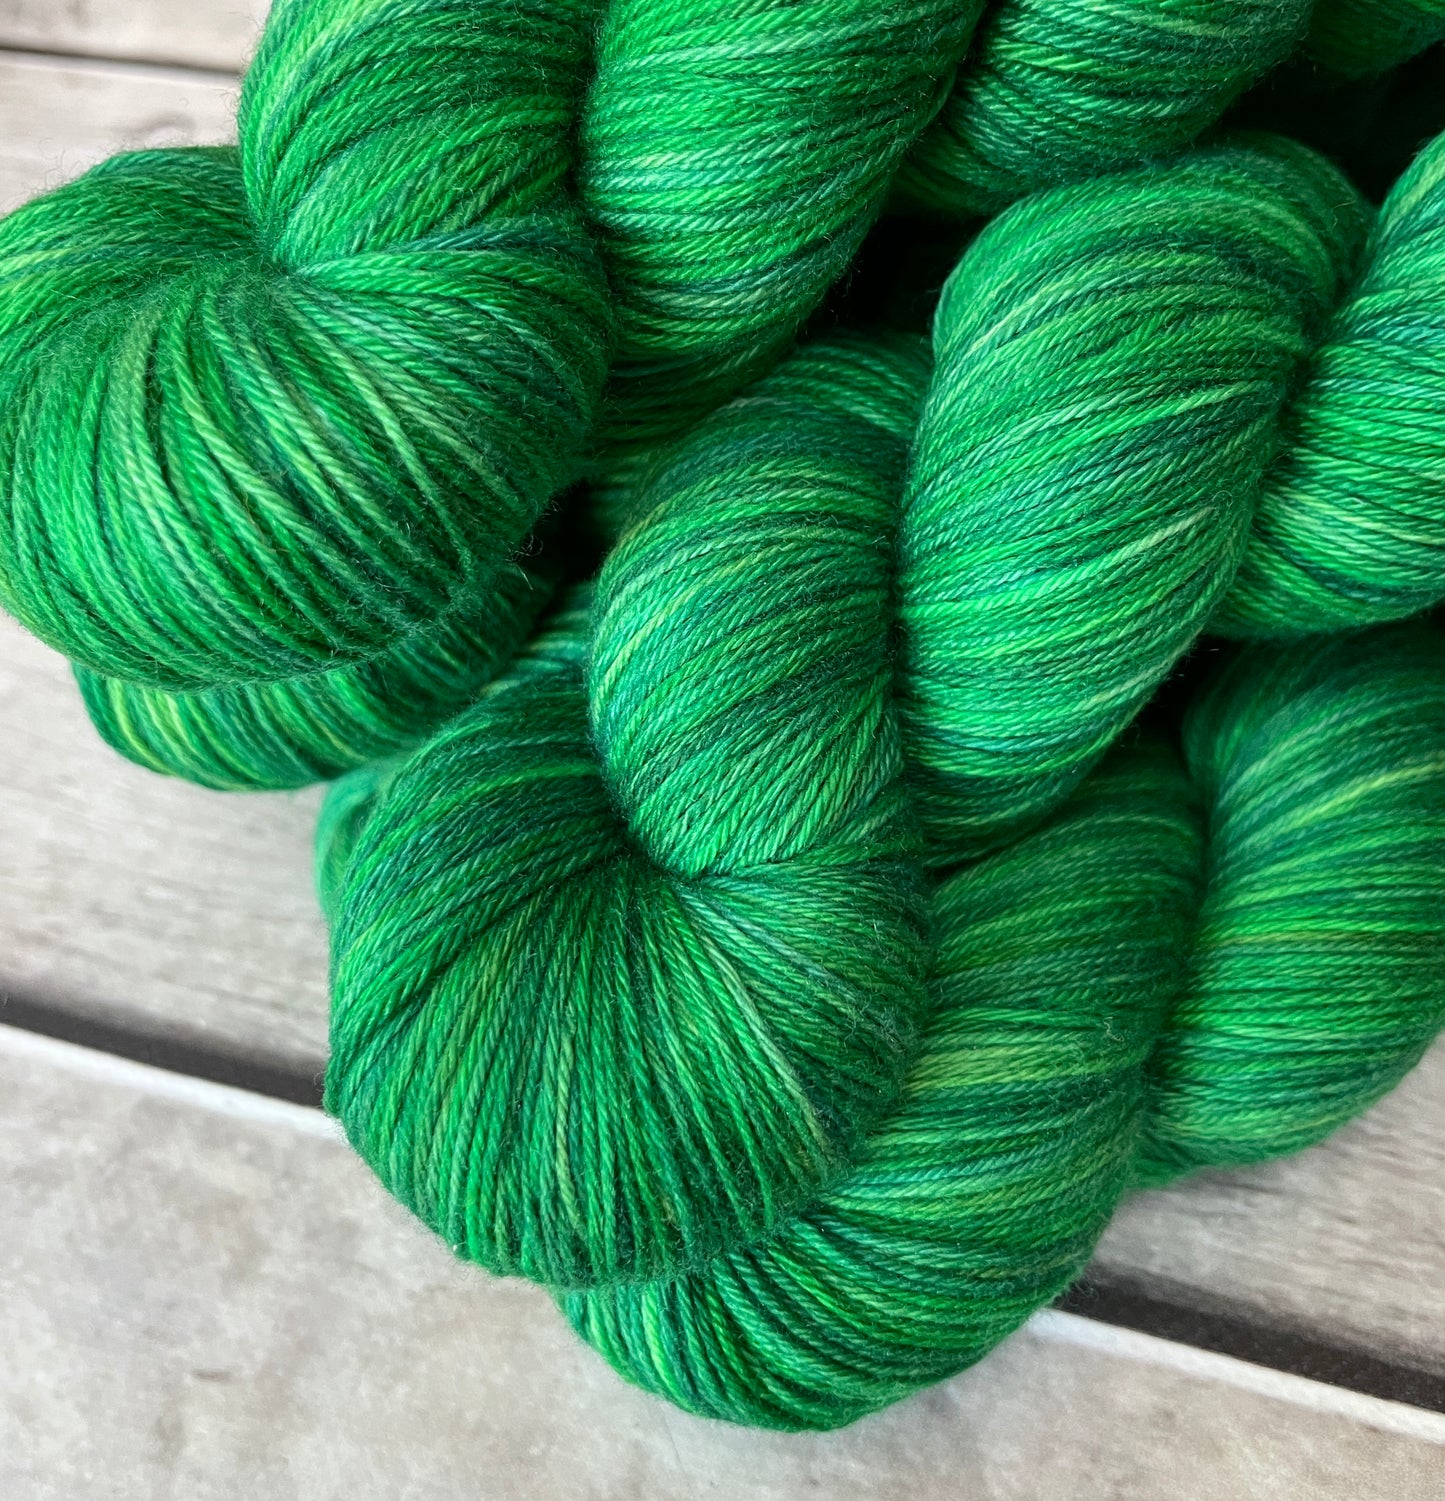 Evergreen - sock yarn in merino and nylon - Darjeeling